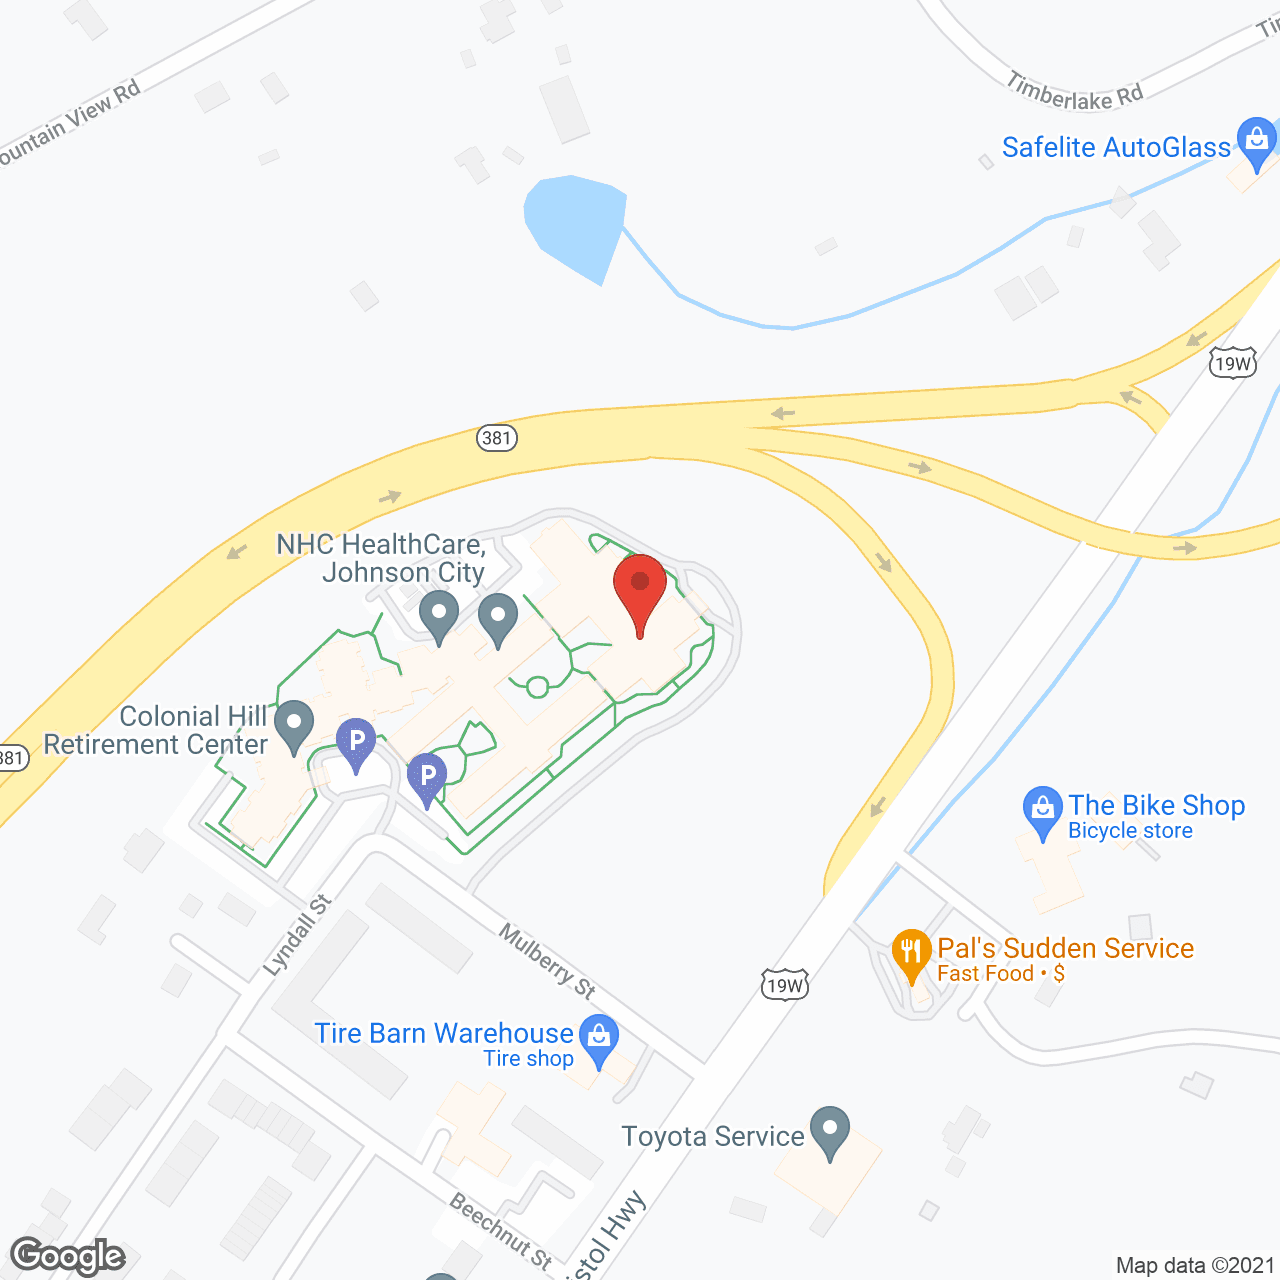 NHC Health Care - Johnson City in google map